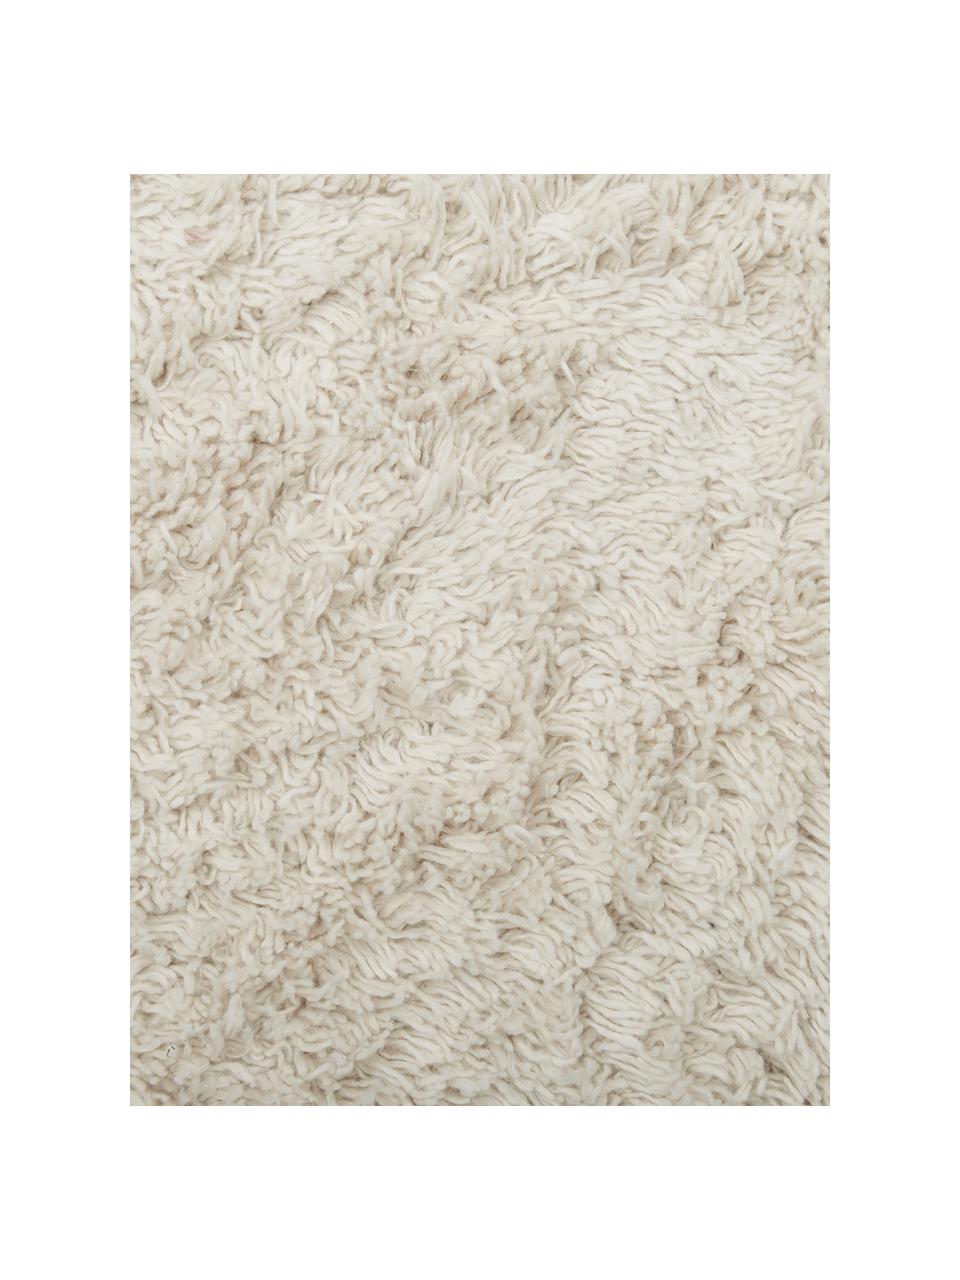 Alfombra redonda artesanal de algodón Daya, Blanco crema, Ø 120 cm (Tamaño S)